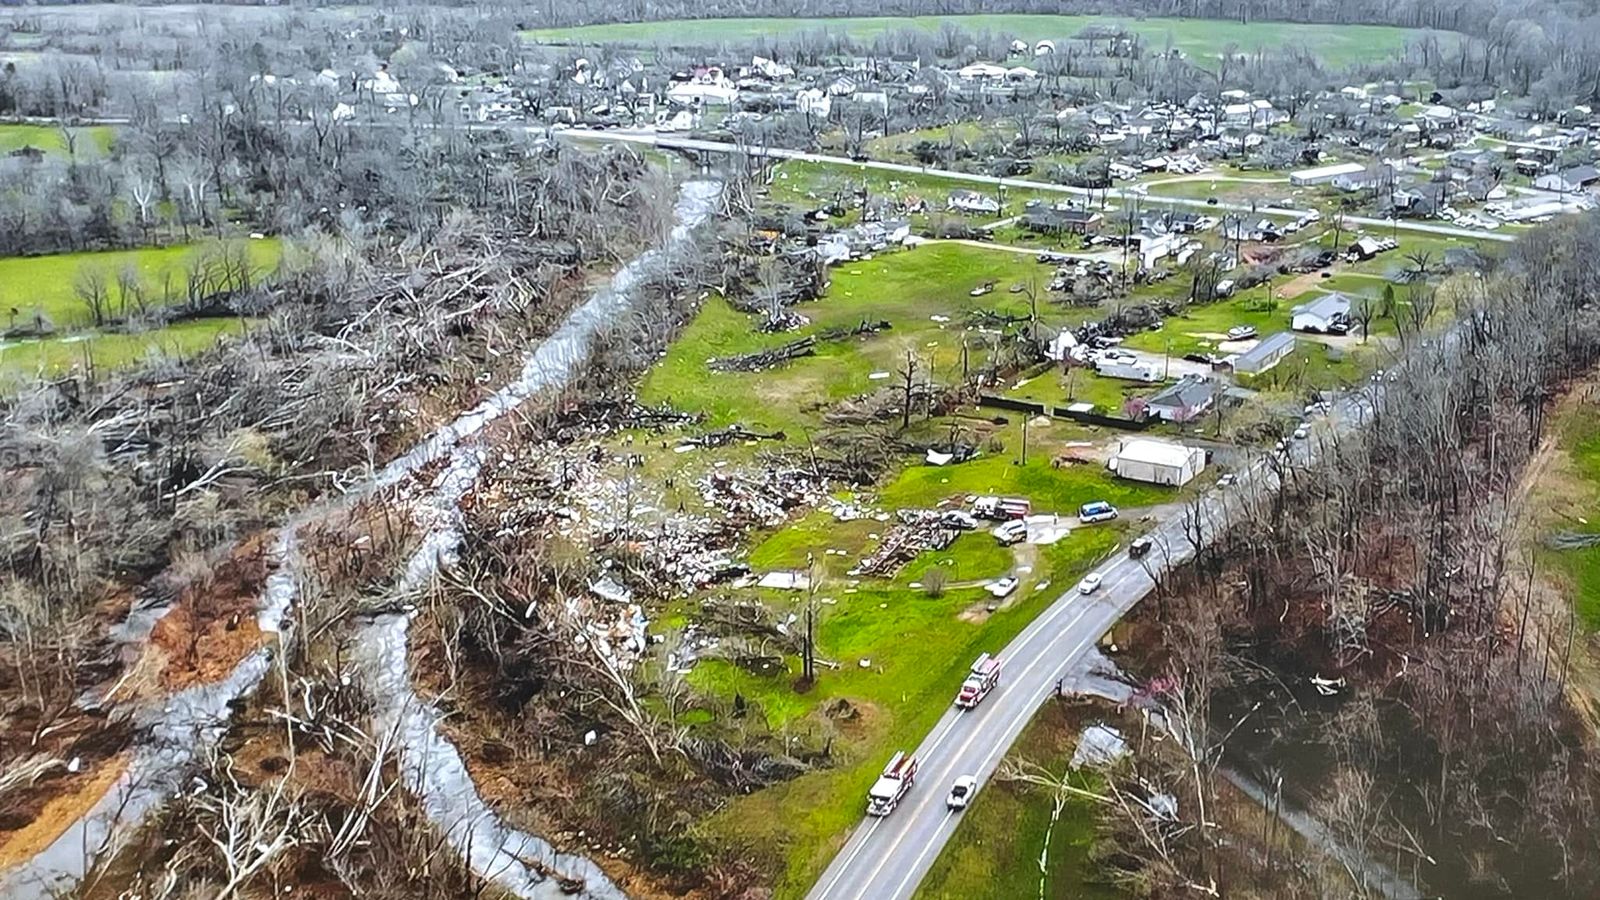 Tornado kills 'multiple' people in Missouri, say US officials